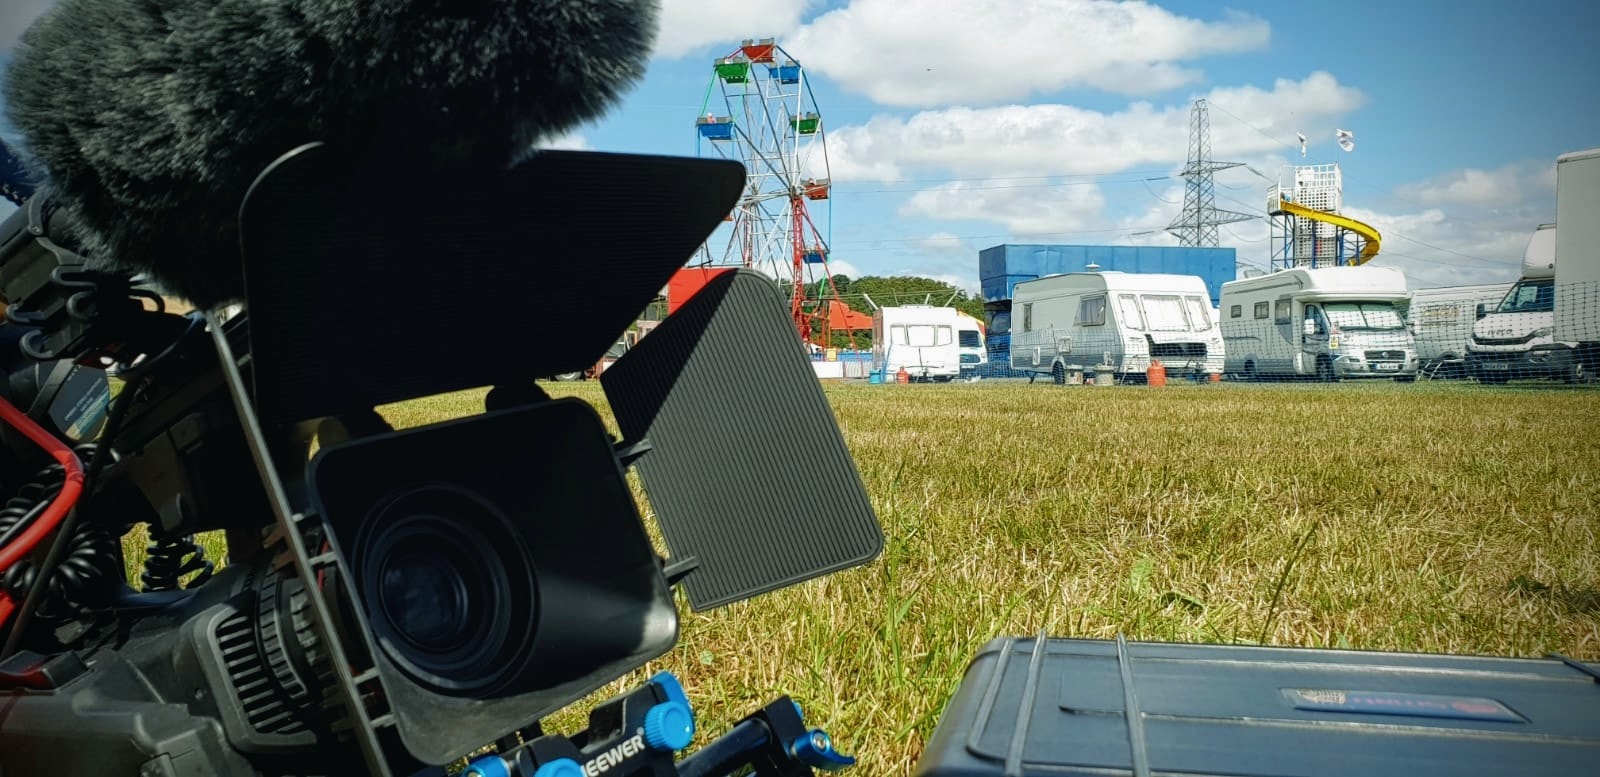 Rebel Boy Media filming at the North Devon Show 2022